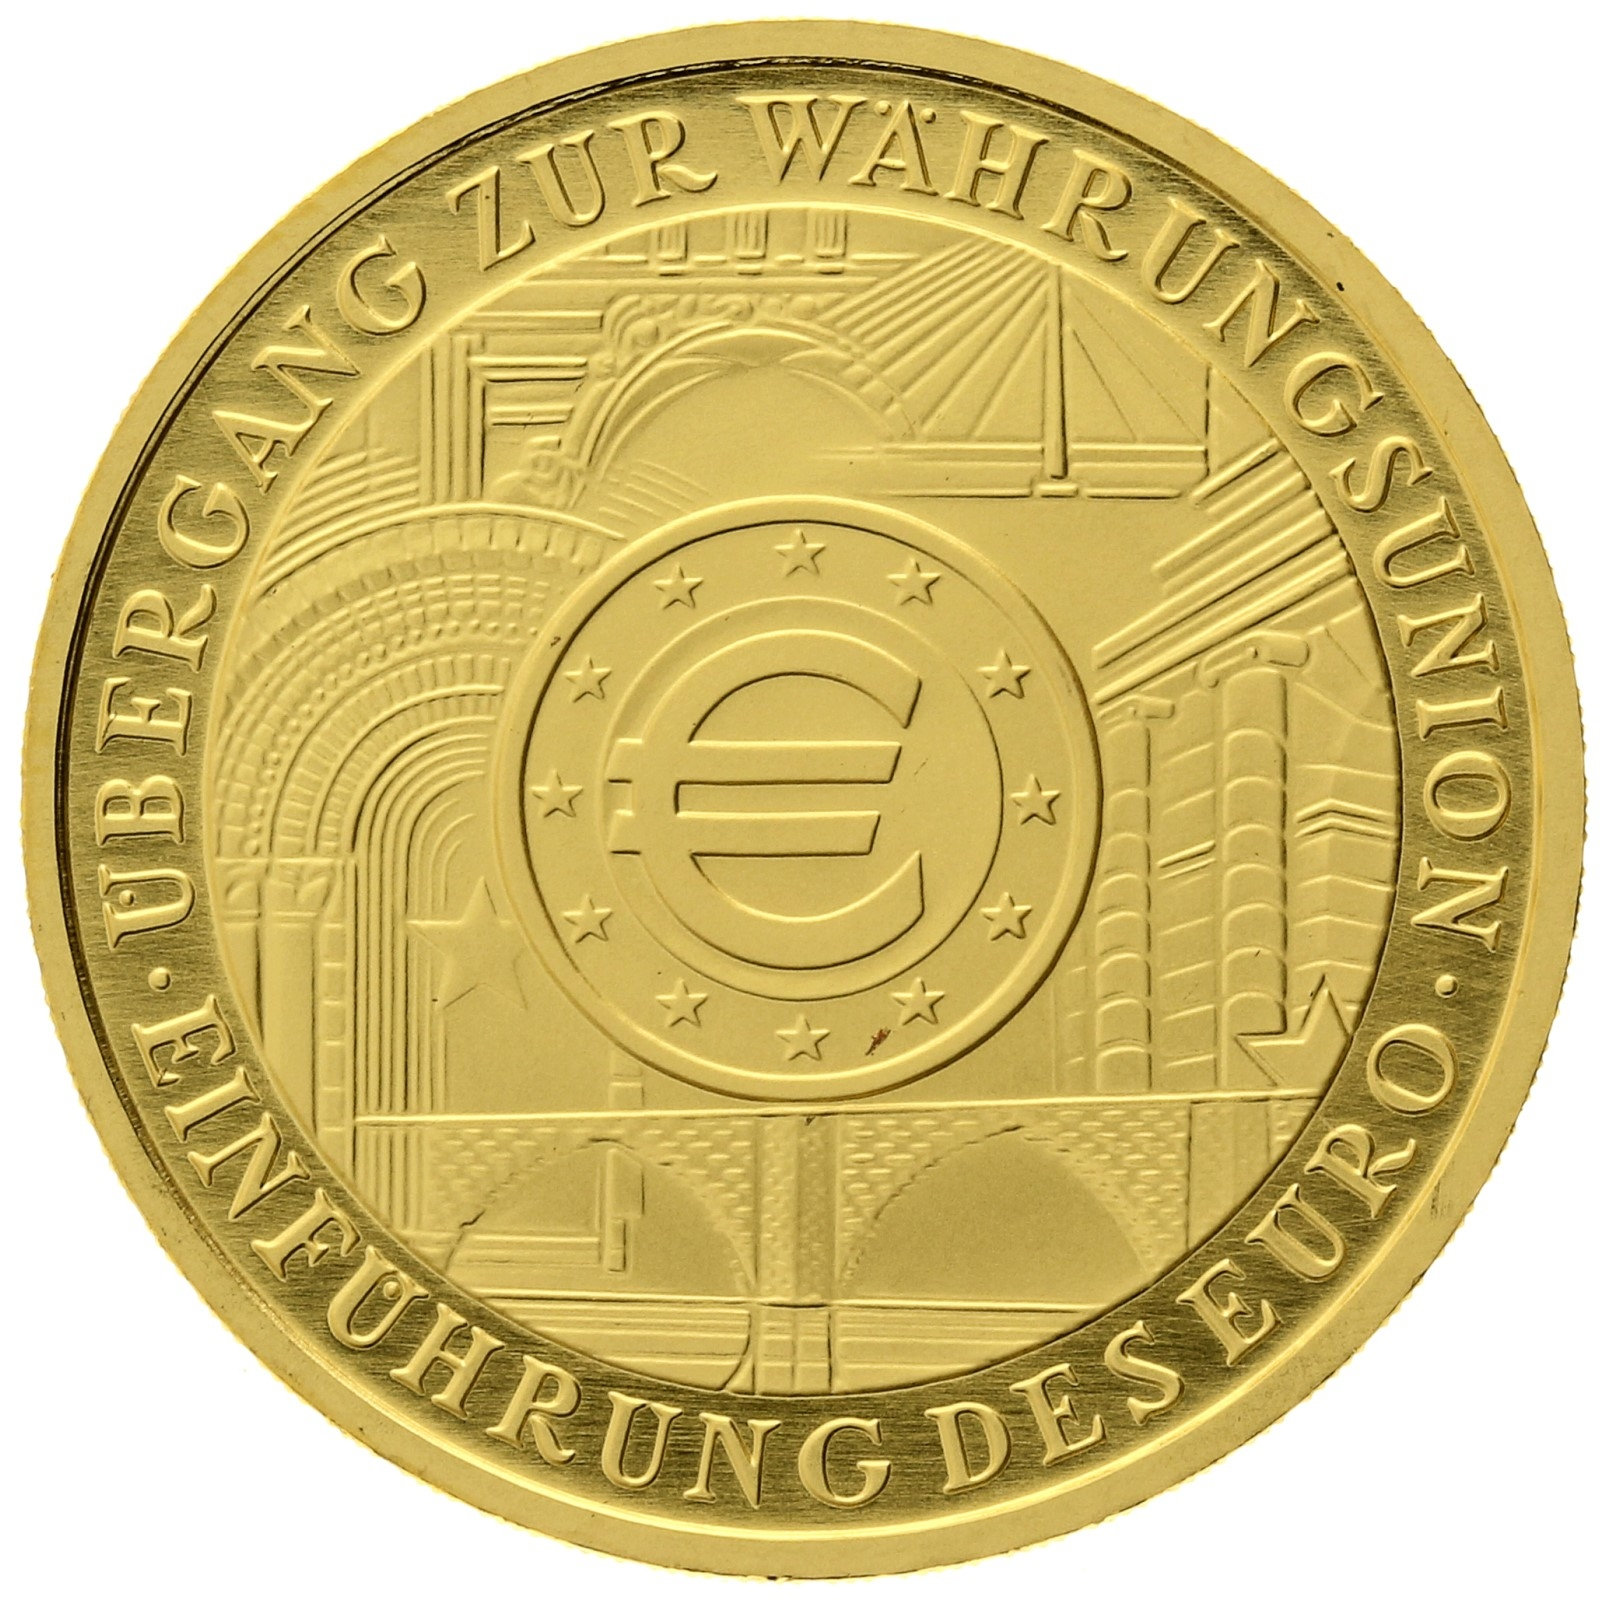 Germany - 100 Euro - 2002 - Euro Currency - 1/2oz